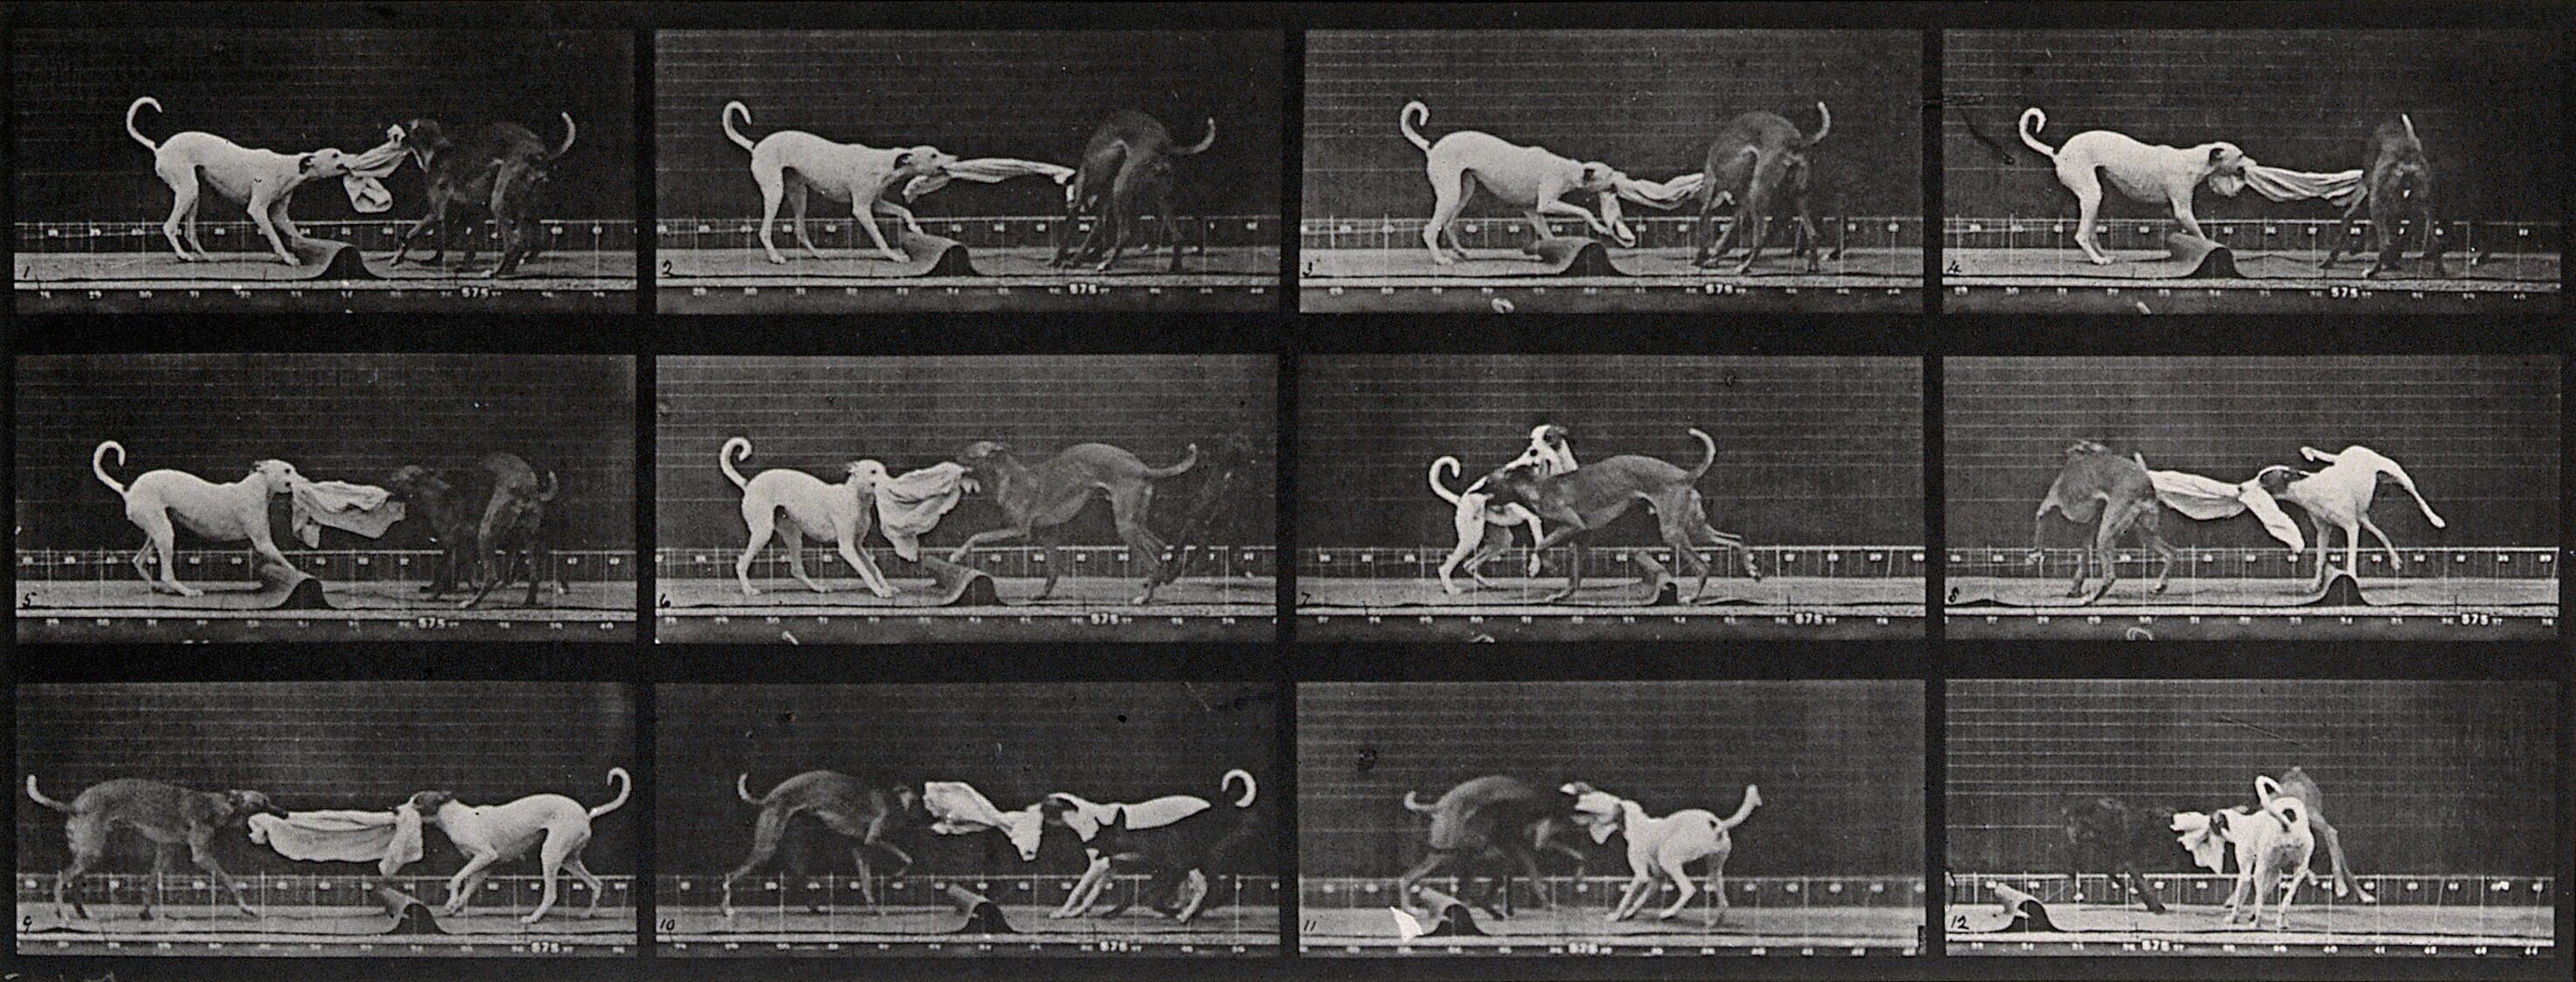 Eadweard Muybridge Black and White Photograph - Human and Animal Locomotion. Plate 715. 